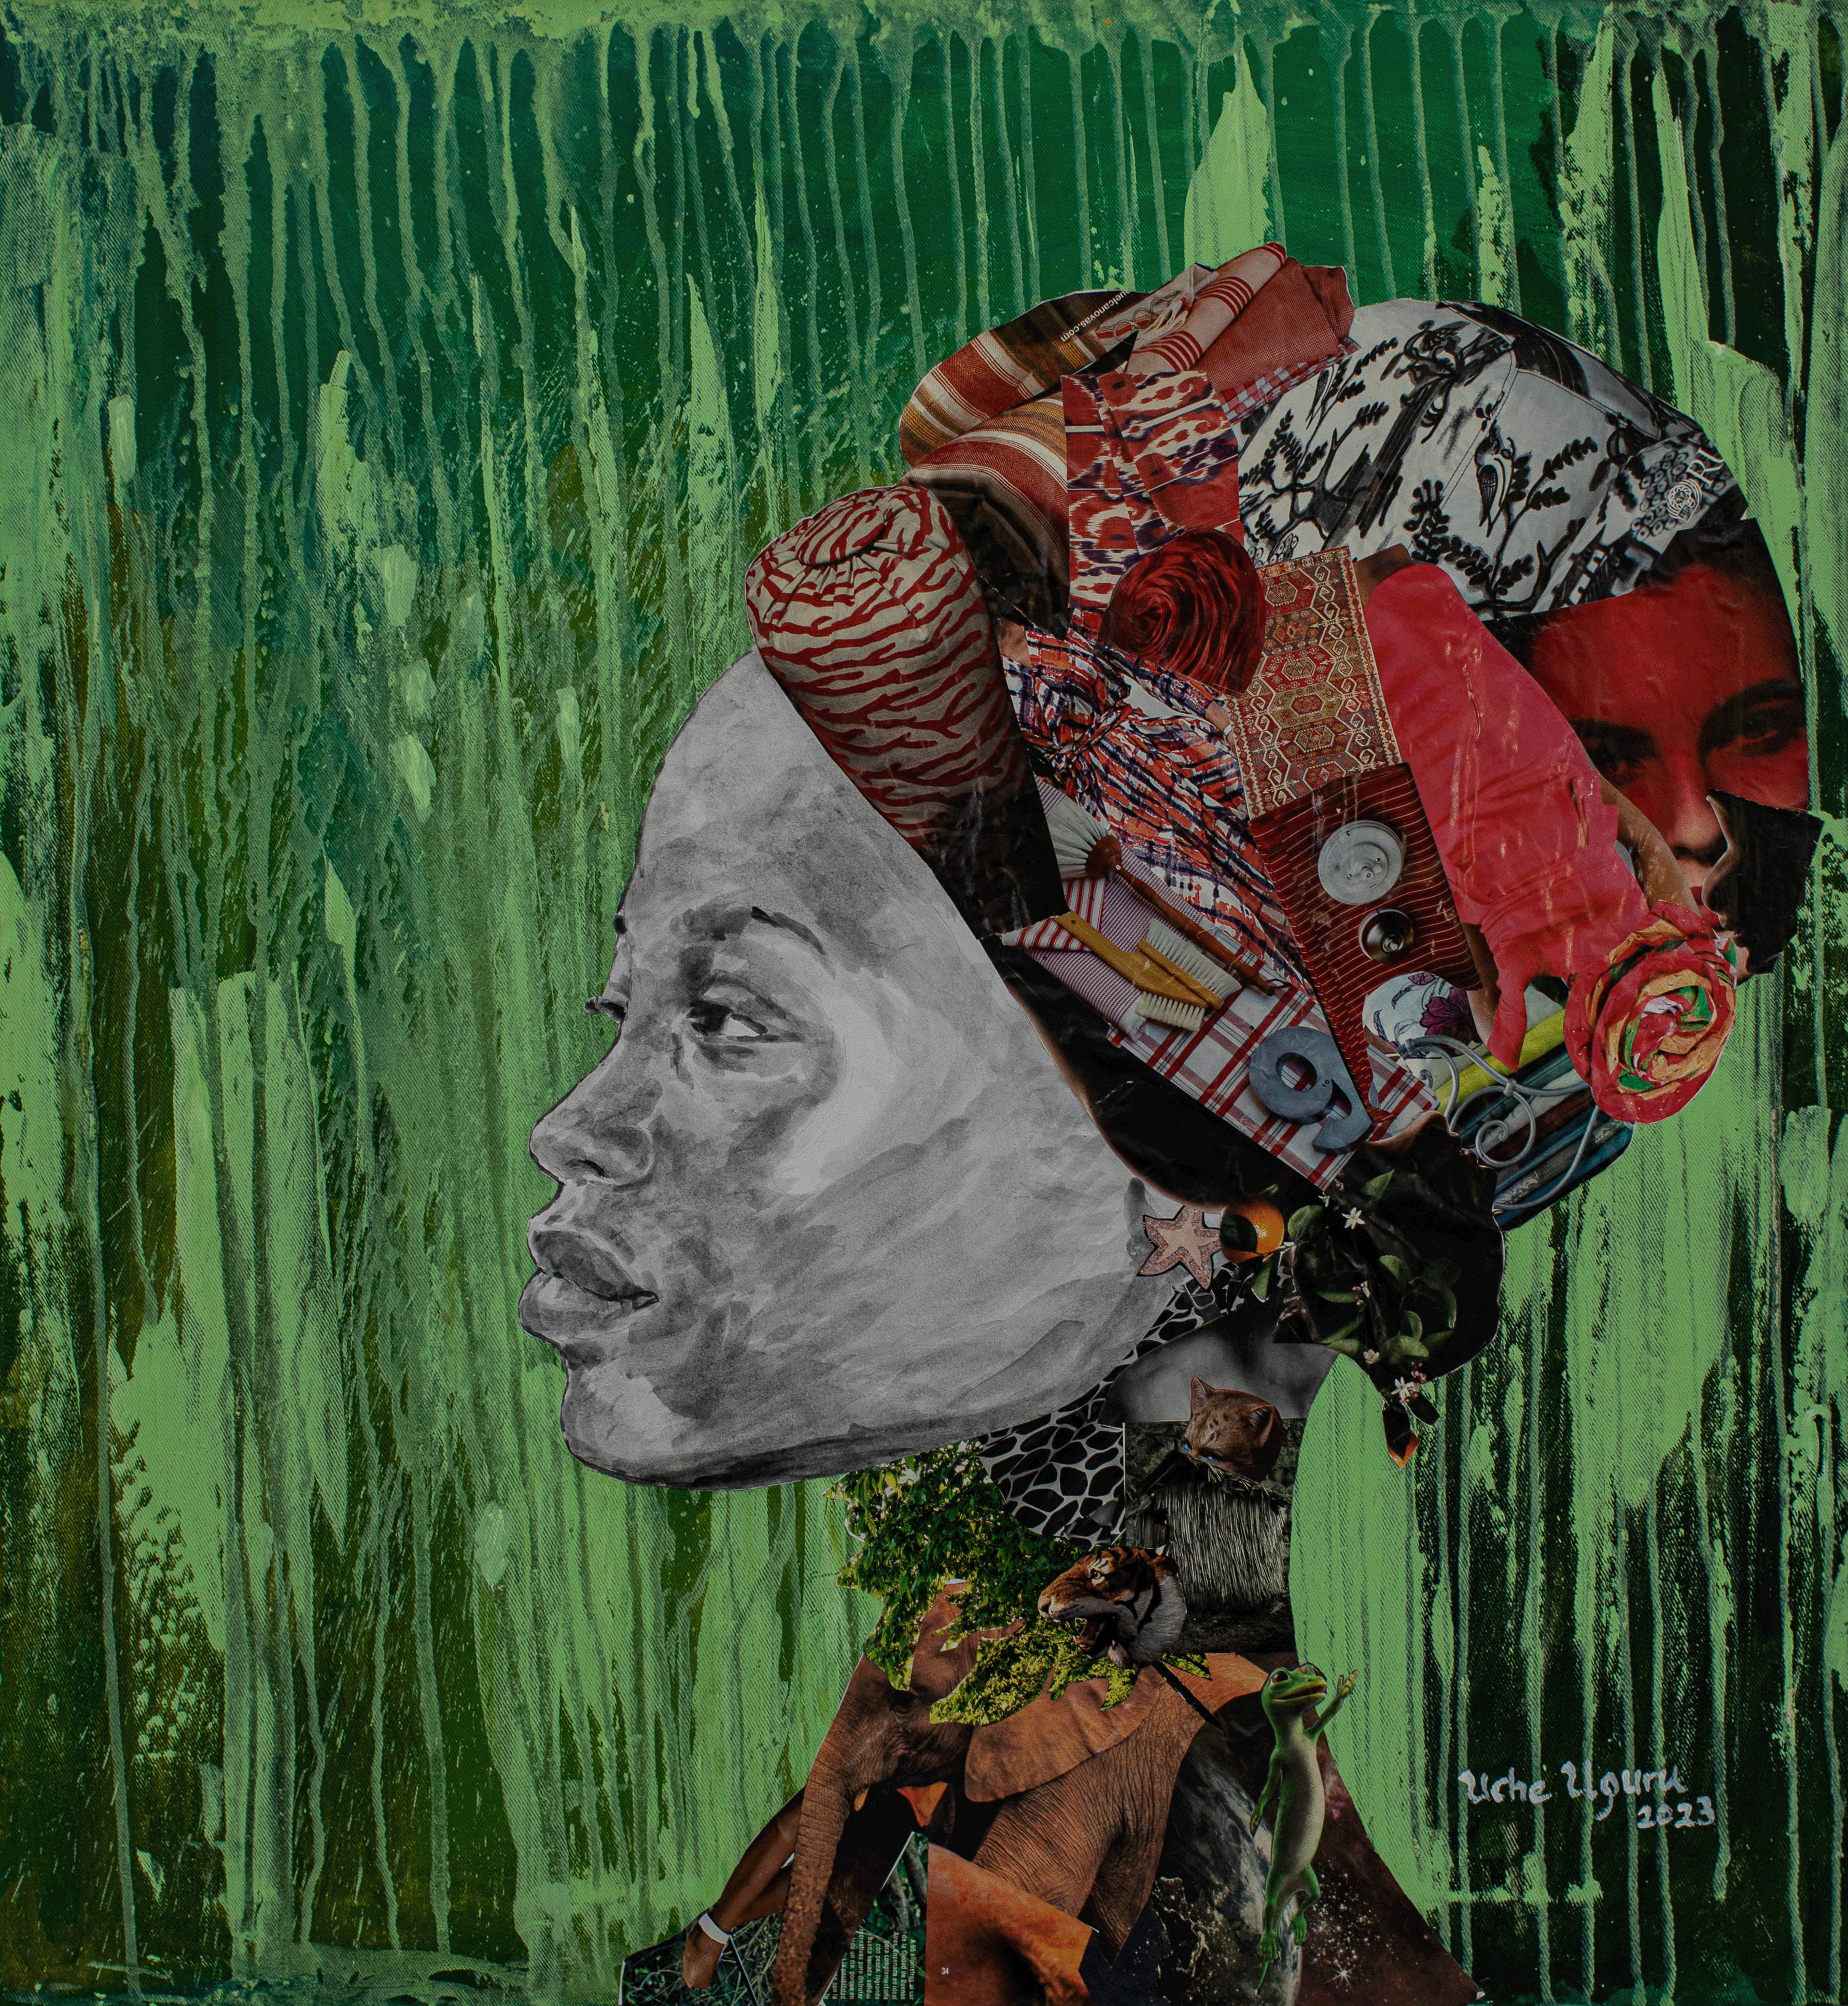 Celebrating Nigerian Women in Contemporary African Art